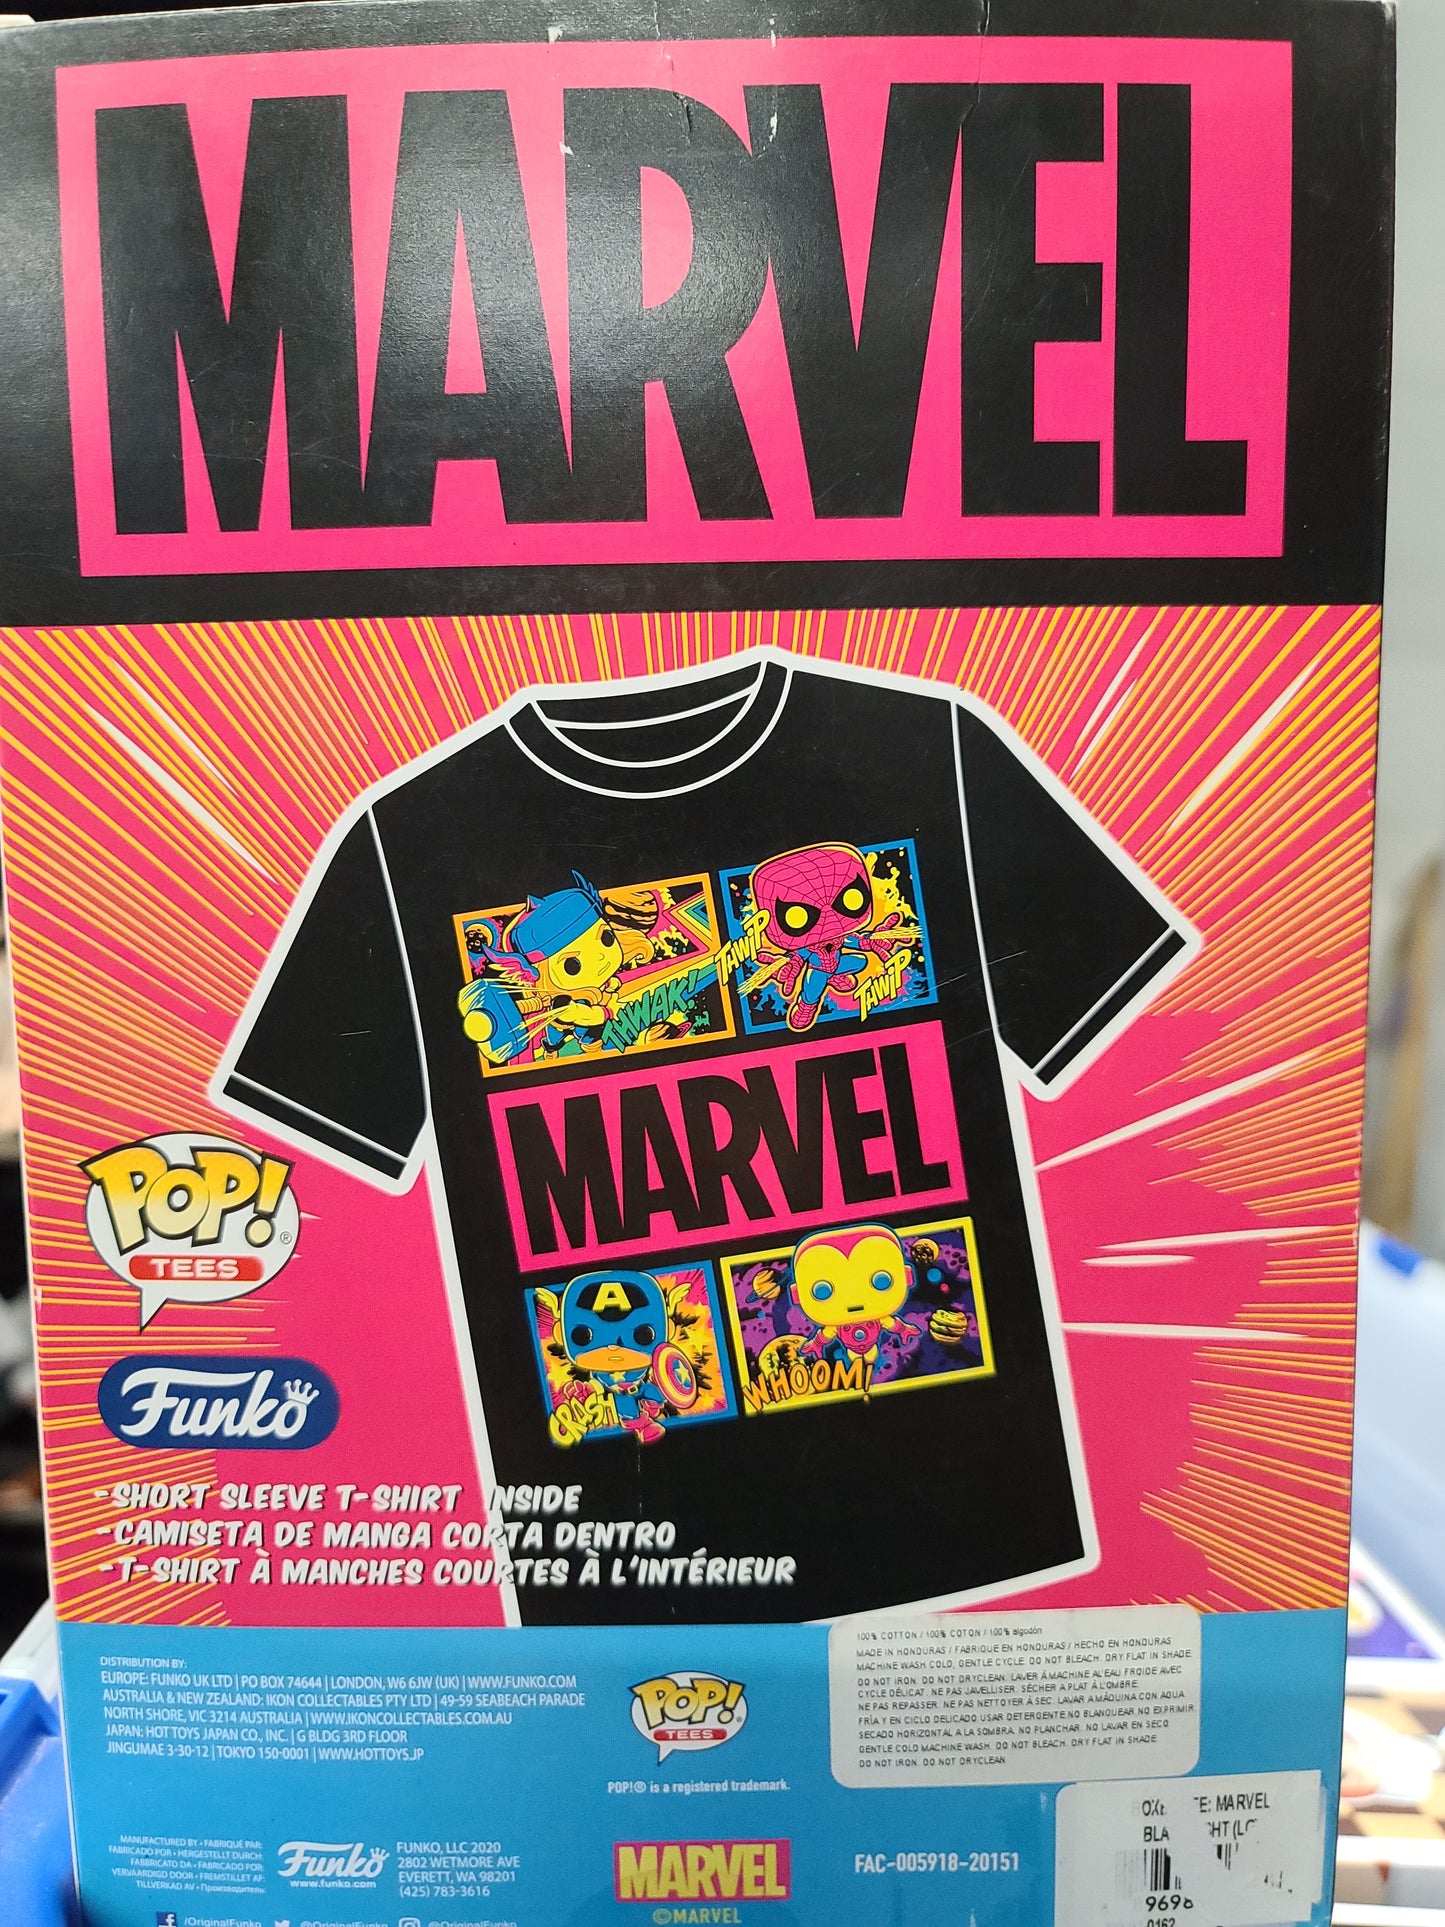 Funko Pop Limited Edition Marvel T-Shirt